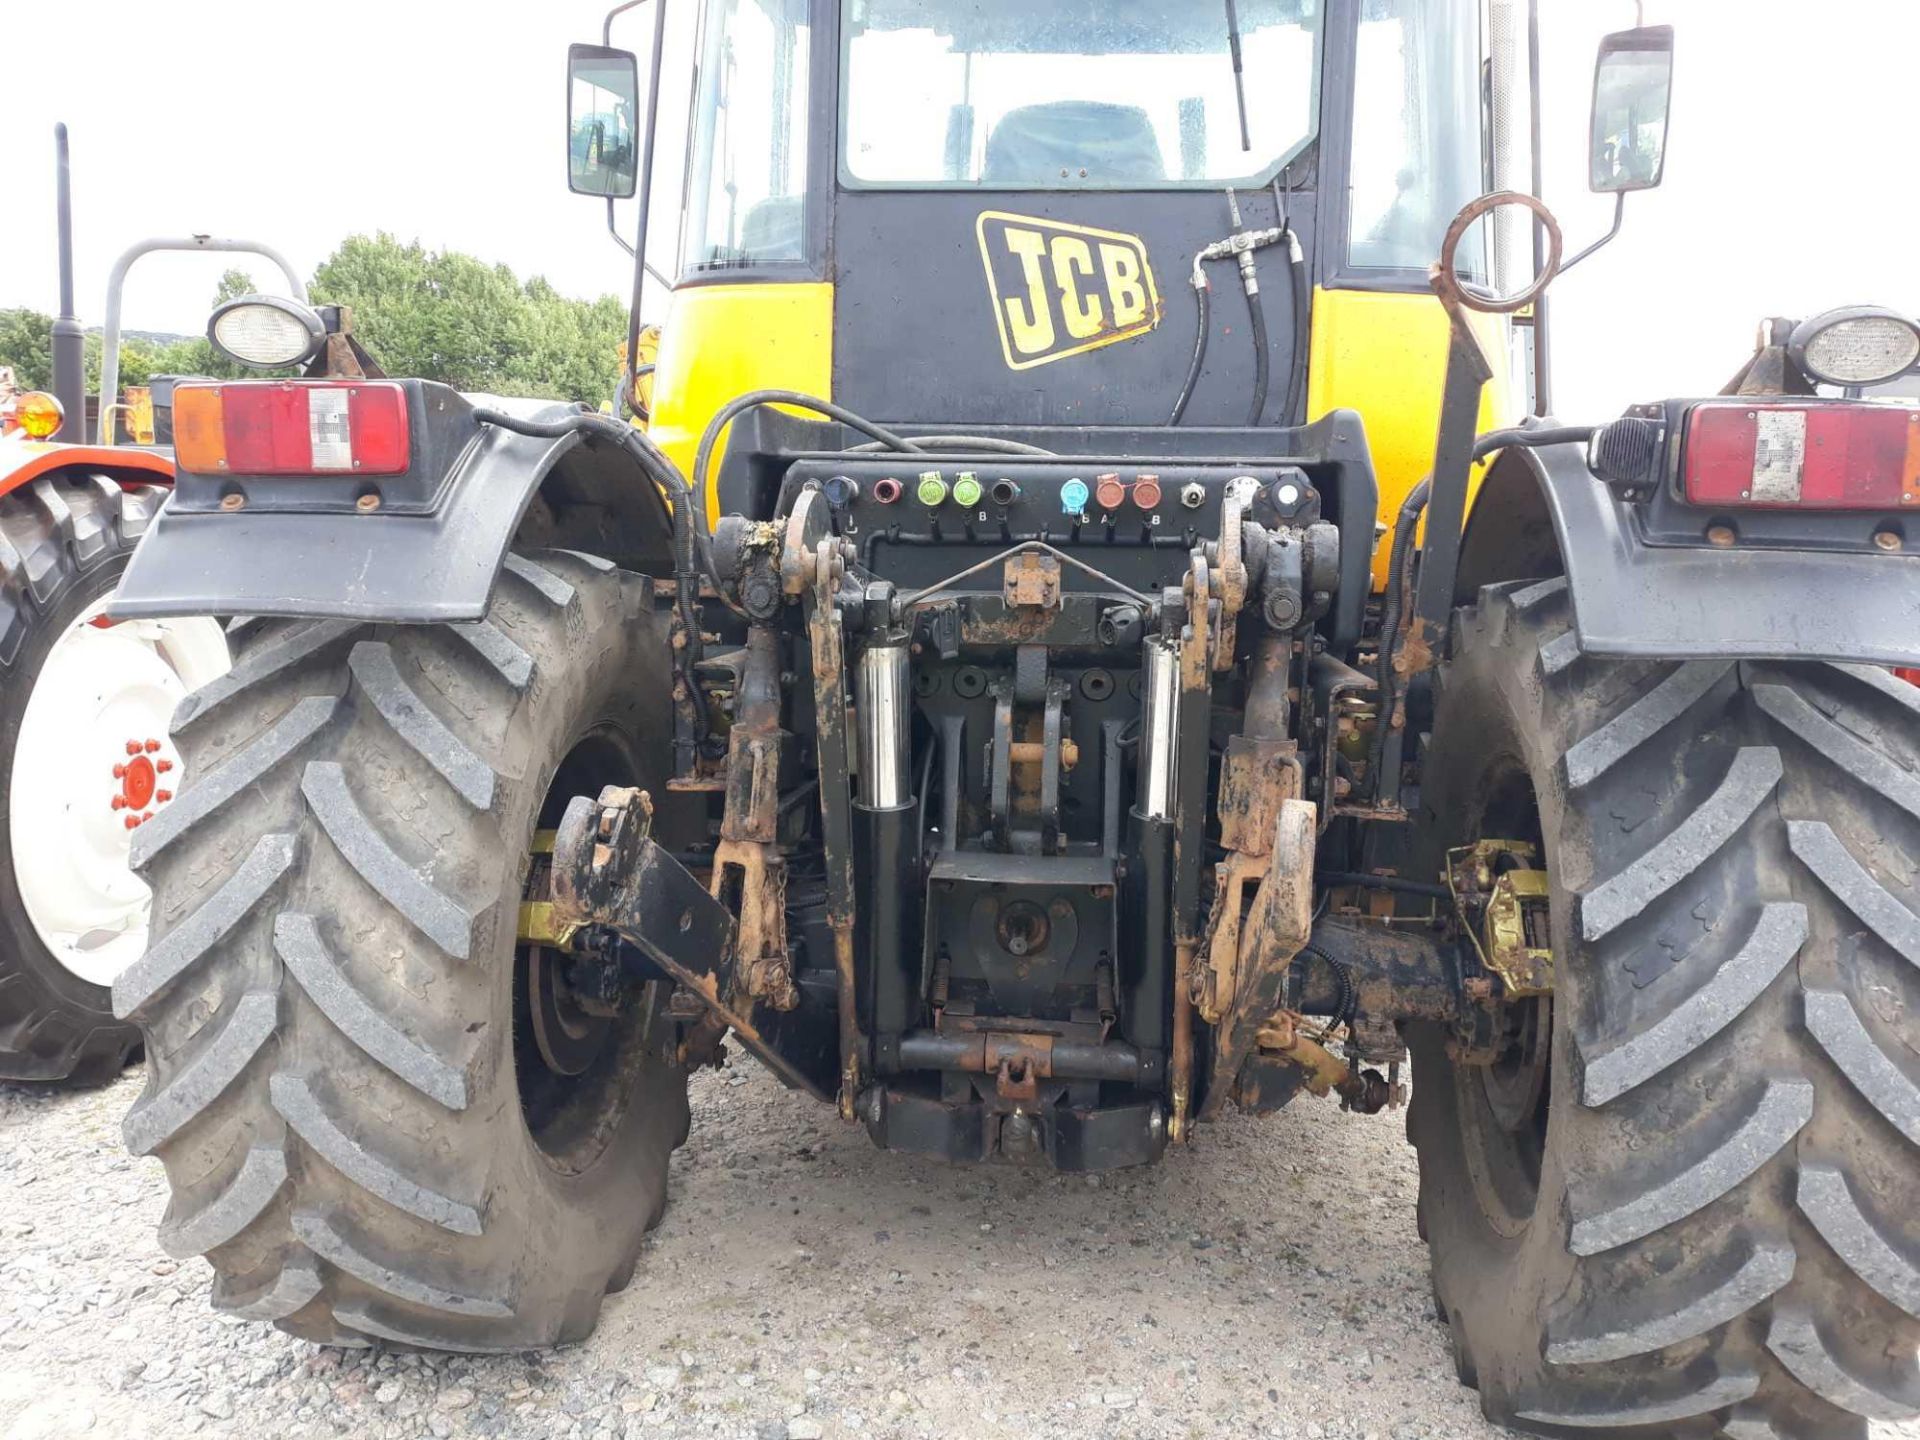 Jcb Fastrac 3220Plus - 5883cc Tractor - Image 7 of 8